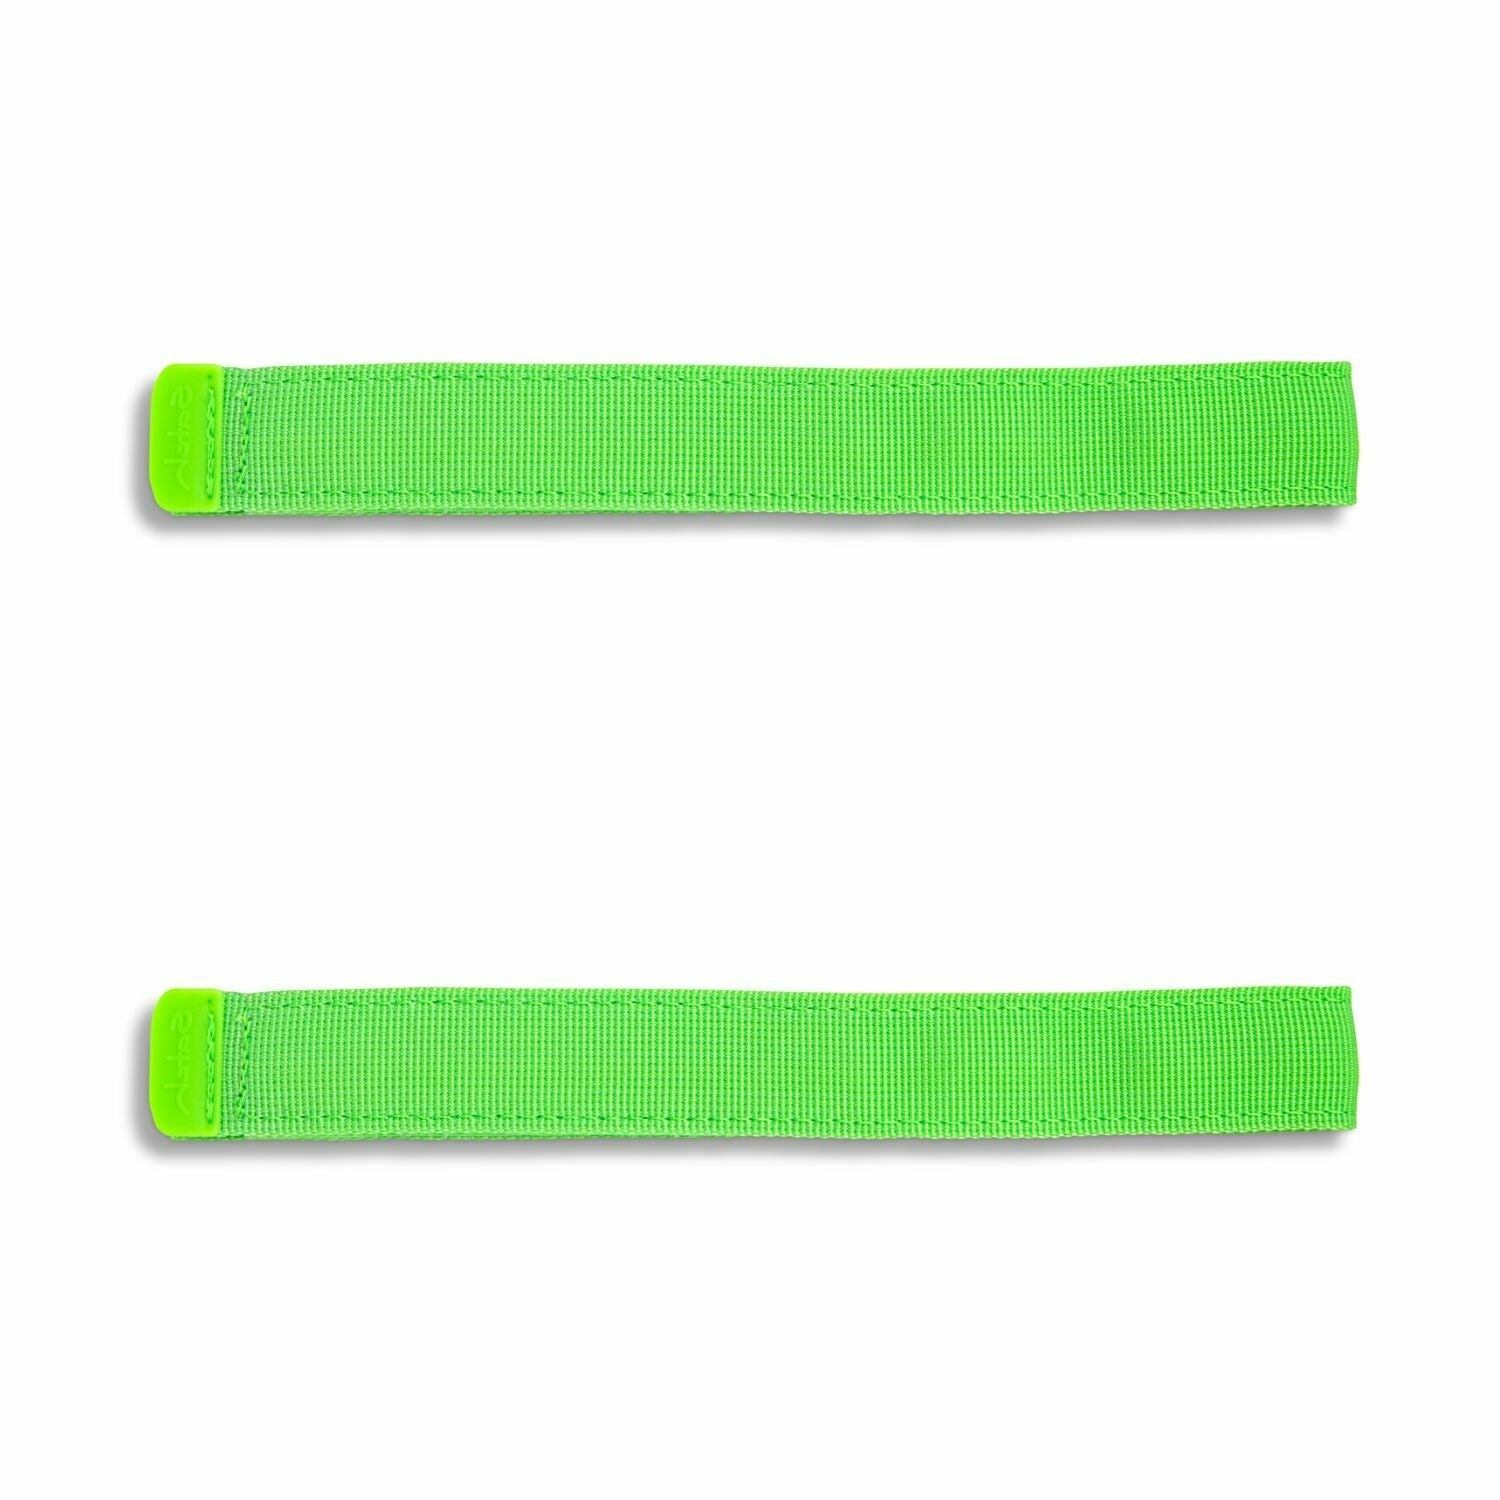 satch | satch swaps | Neon Green